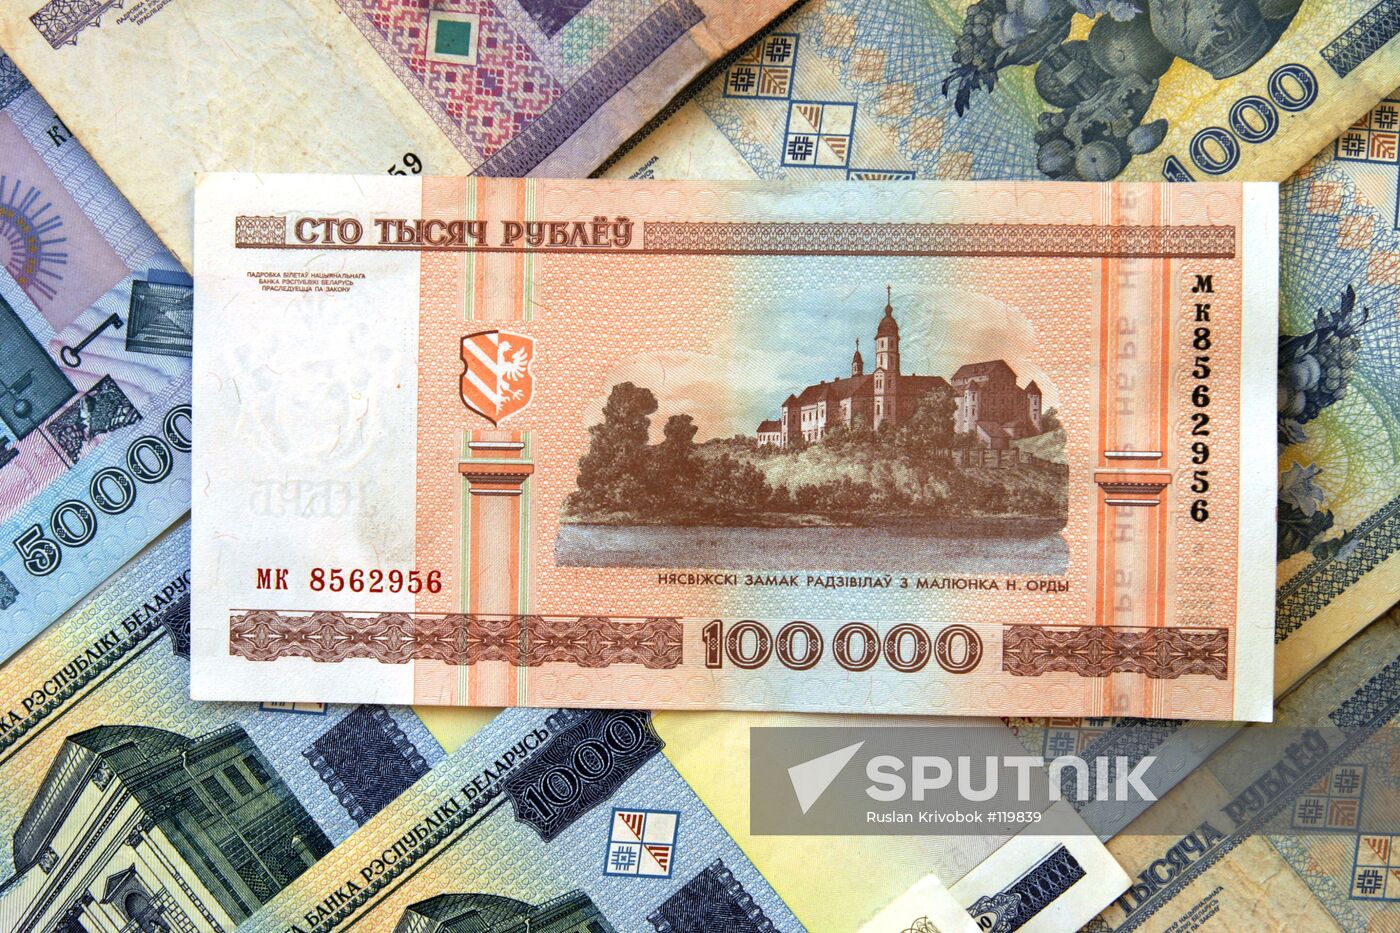 Belarussian monetary units one hundred thousand Belarussian rub